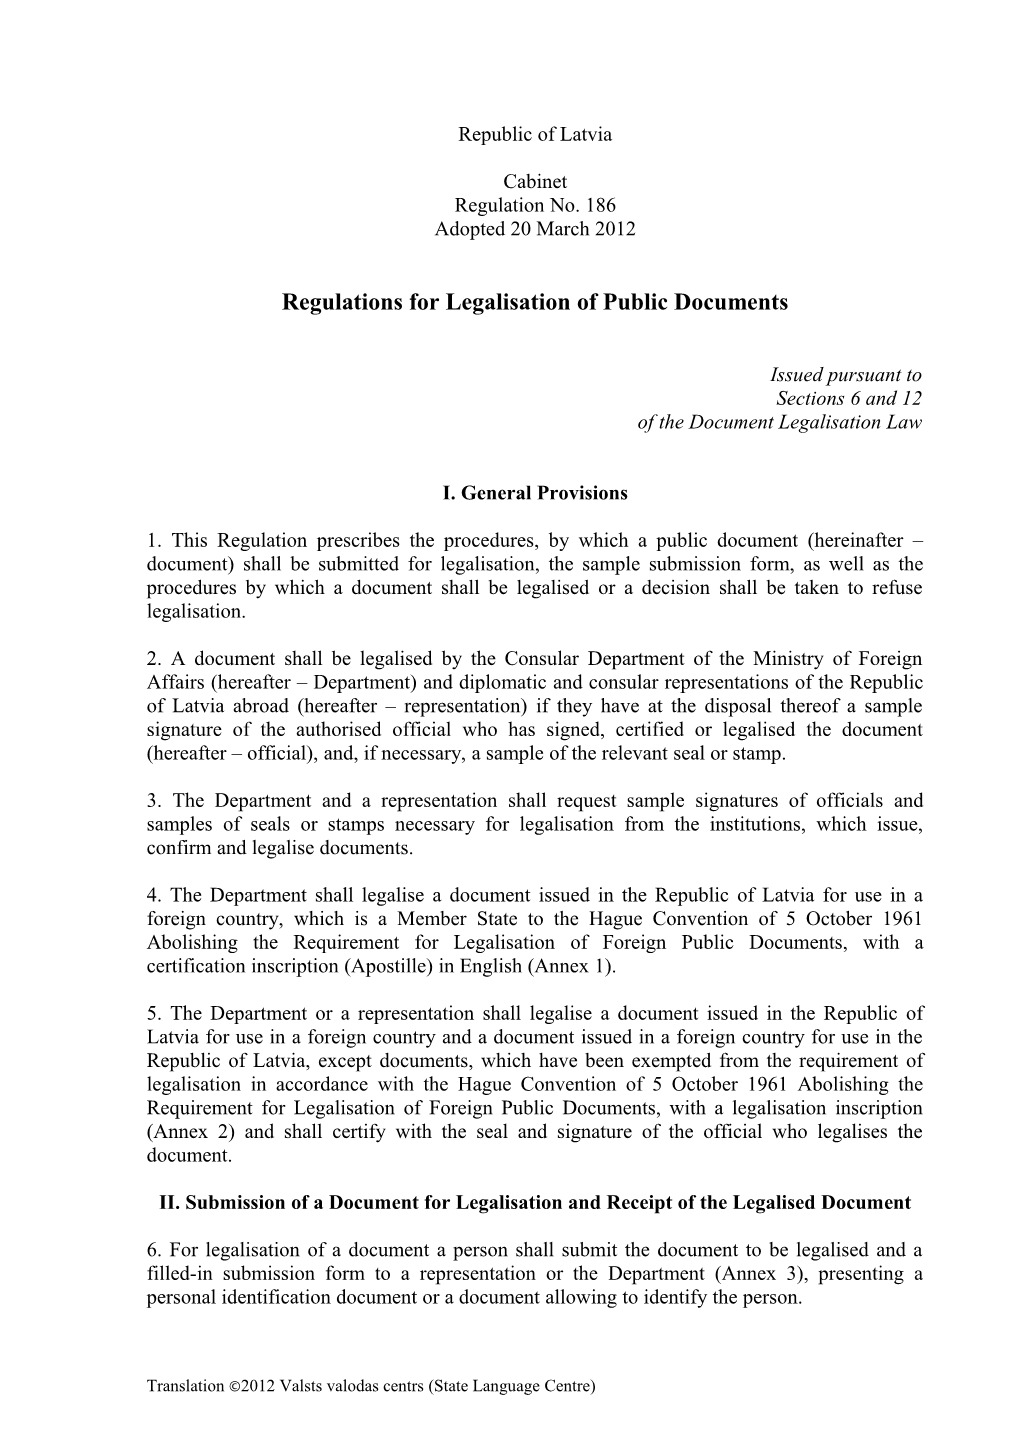 Regulations for Legalisation of Public Documents